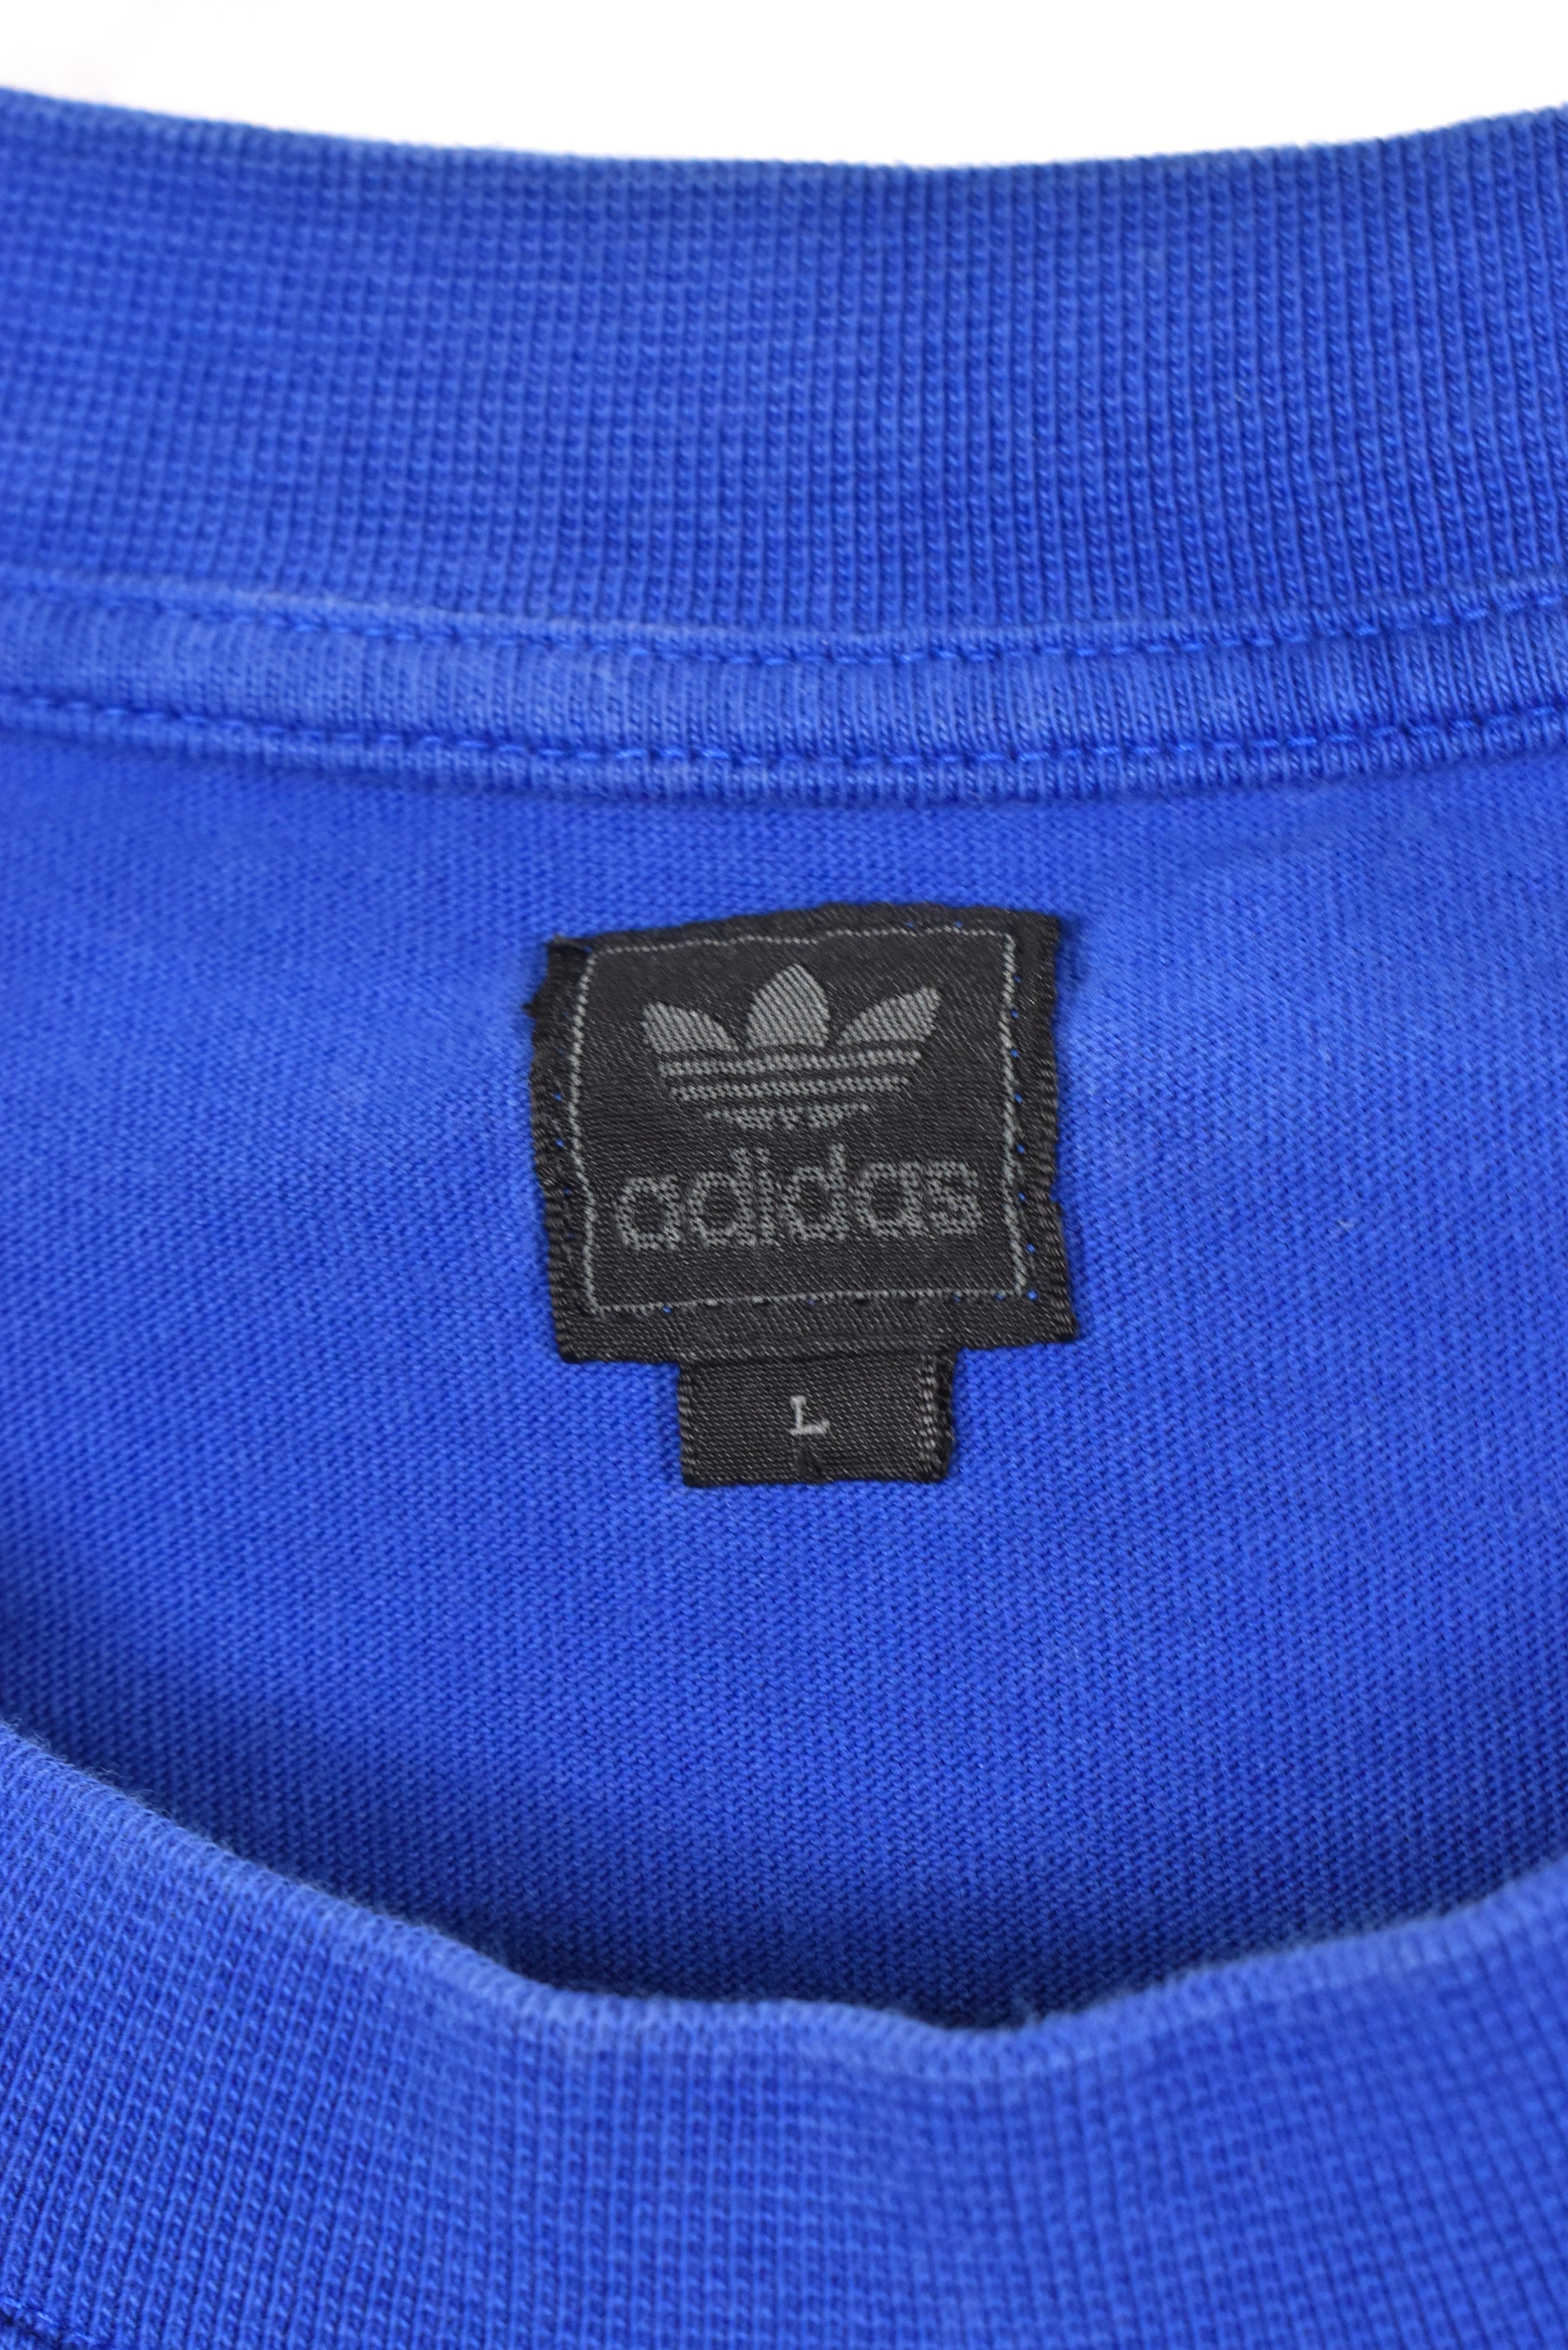 Vintage Adidas shirt, Illie Nastase blue graphic tee - AU Large ADIDAS